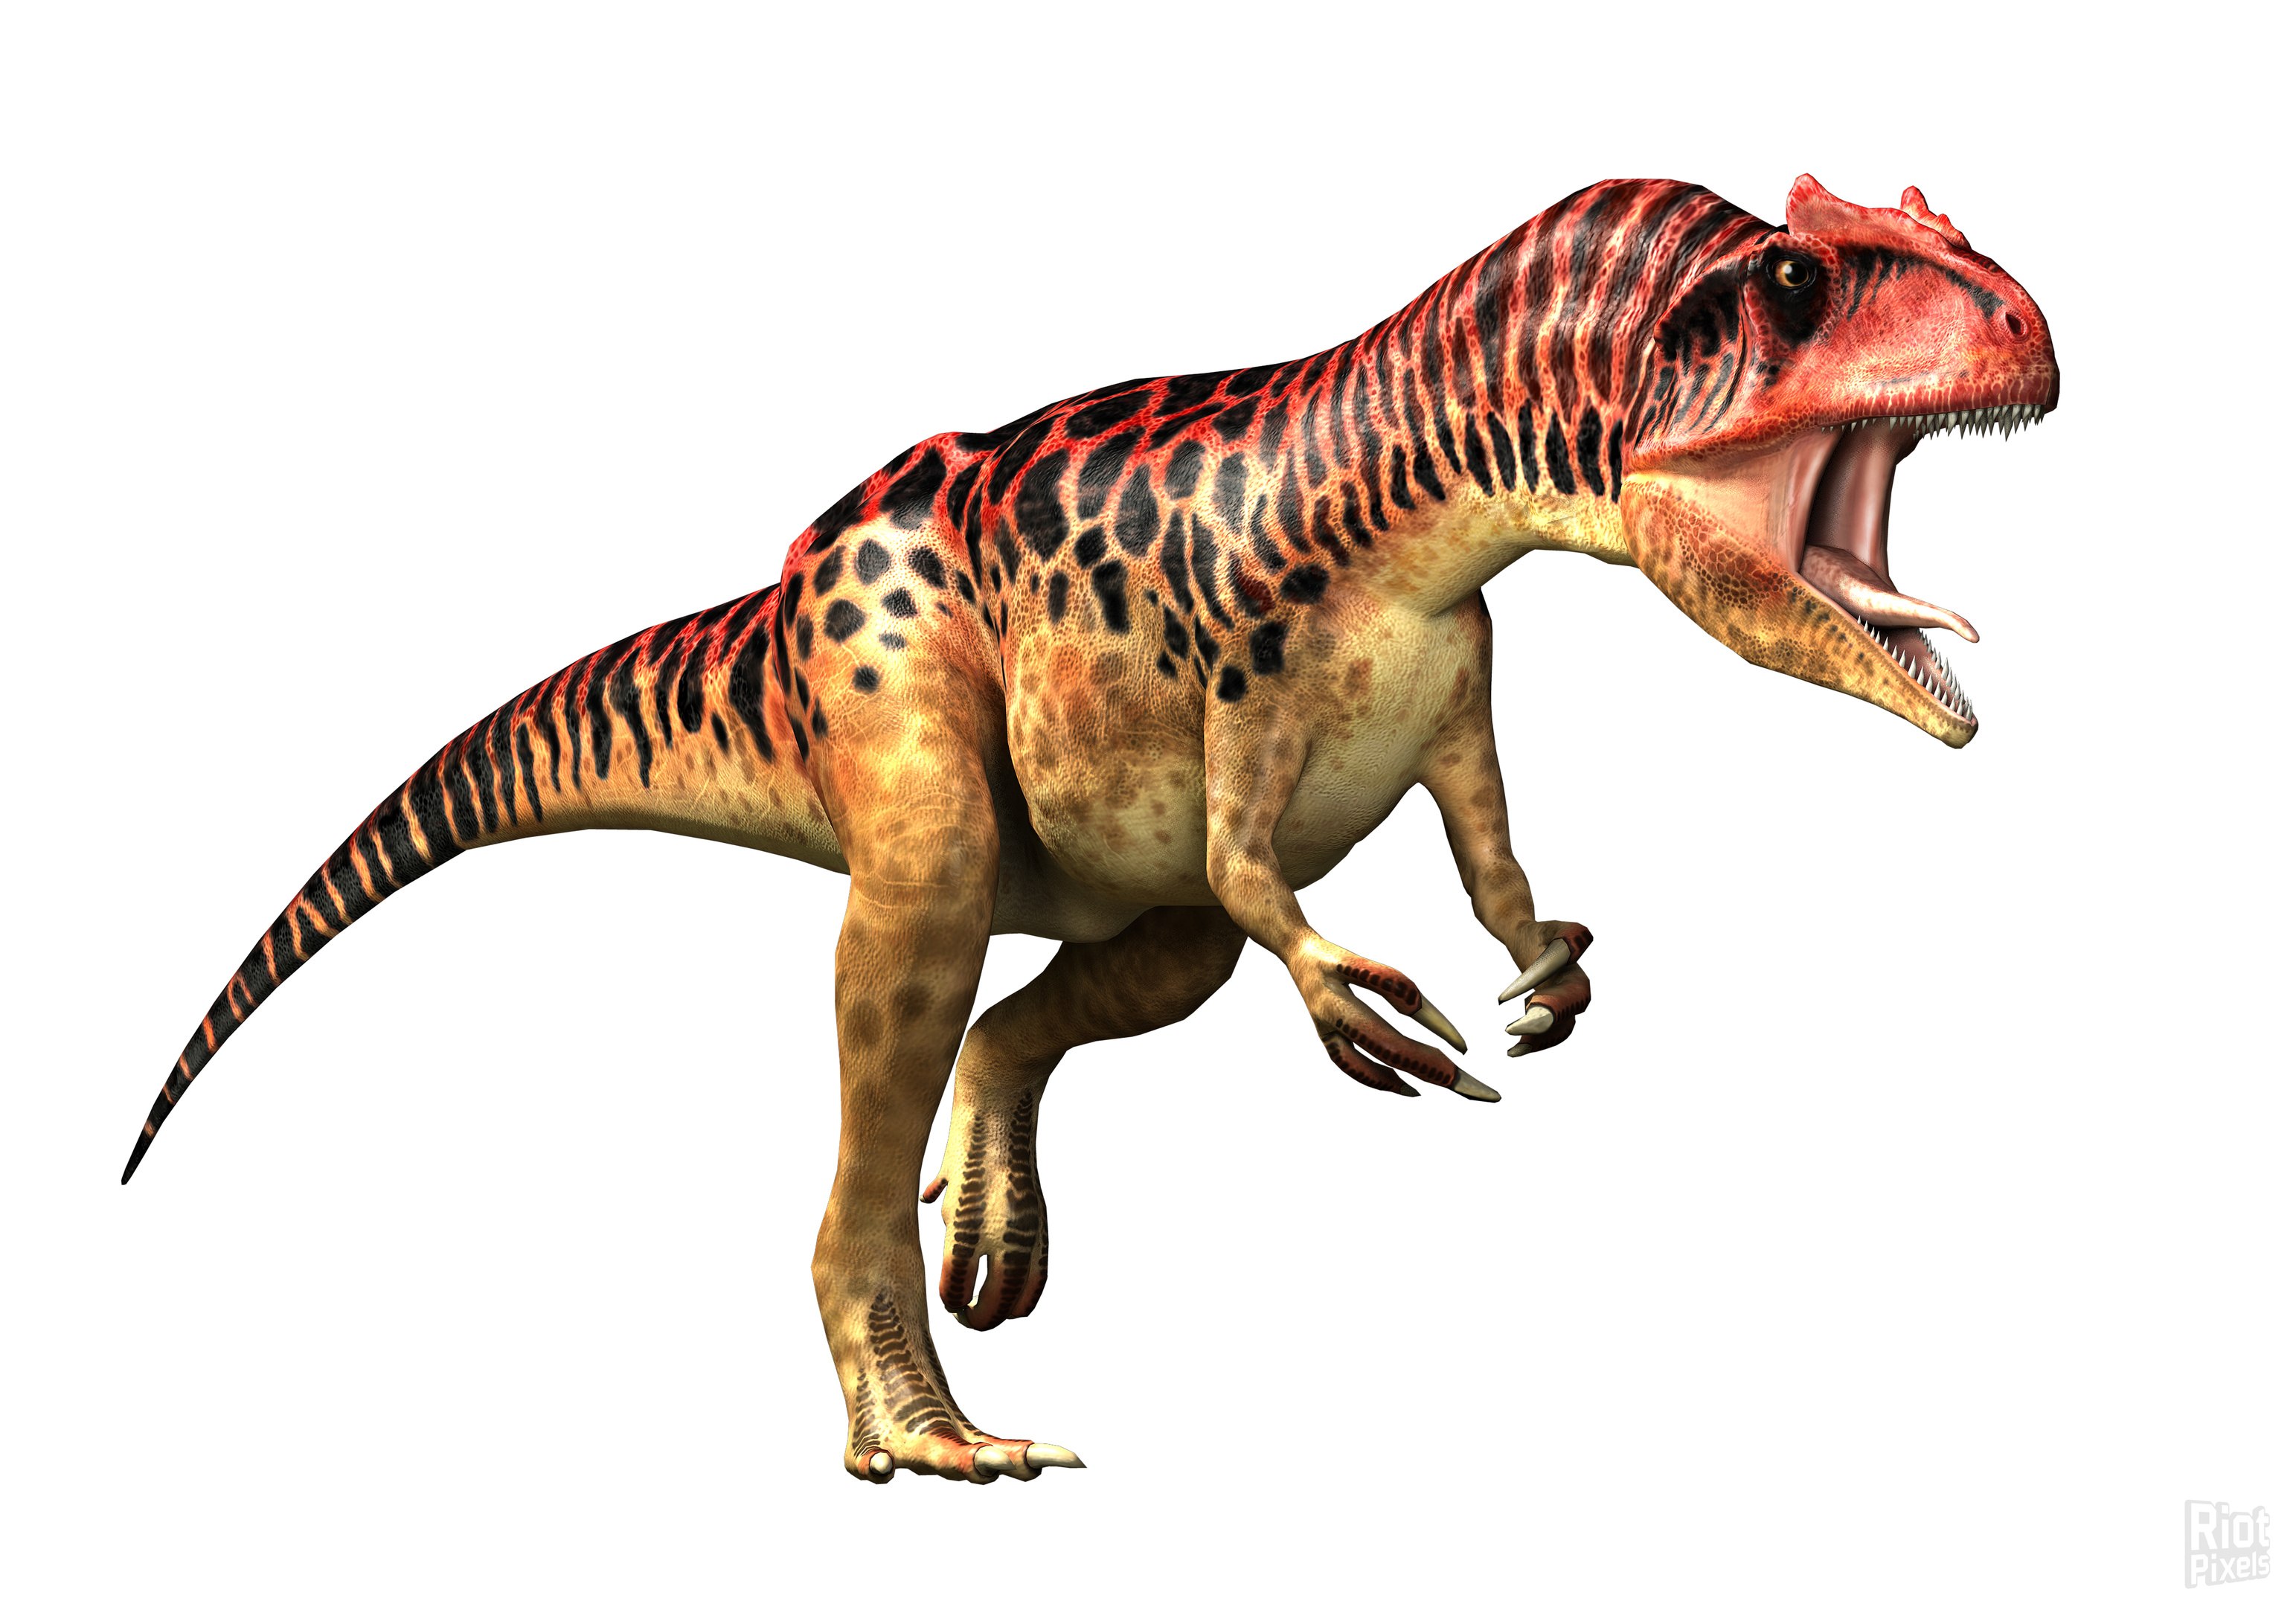 Заурофаганакс. Аллозавр Карнозавр. Аллозавр фрагилис. Аллозавр - хищный динозавр. Аллозавр джиммадсени.